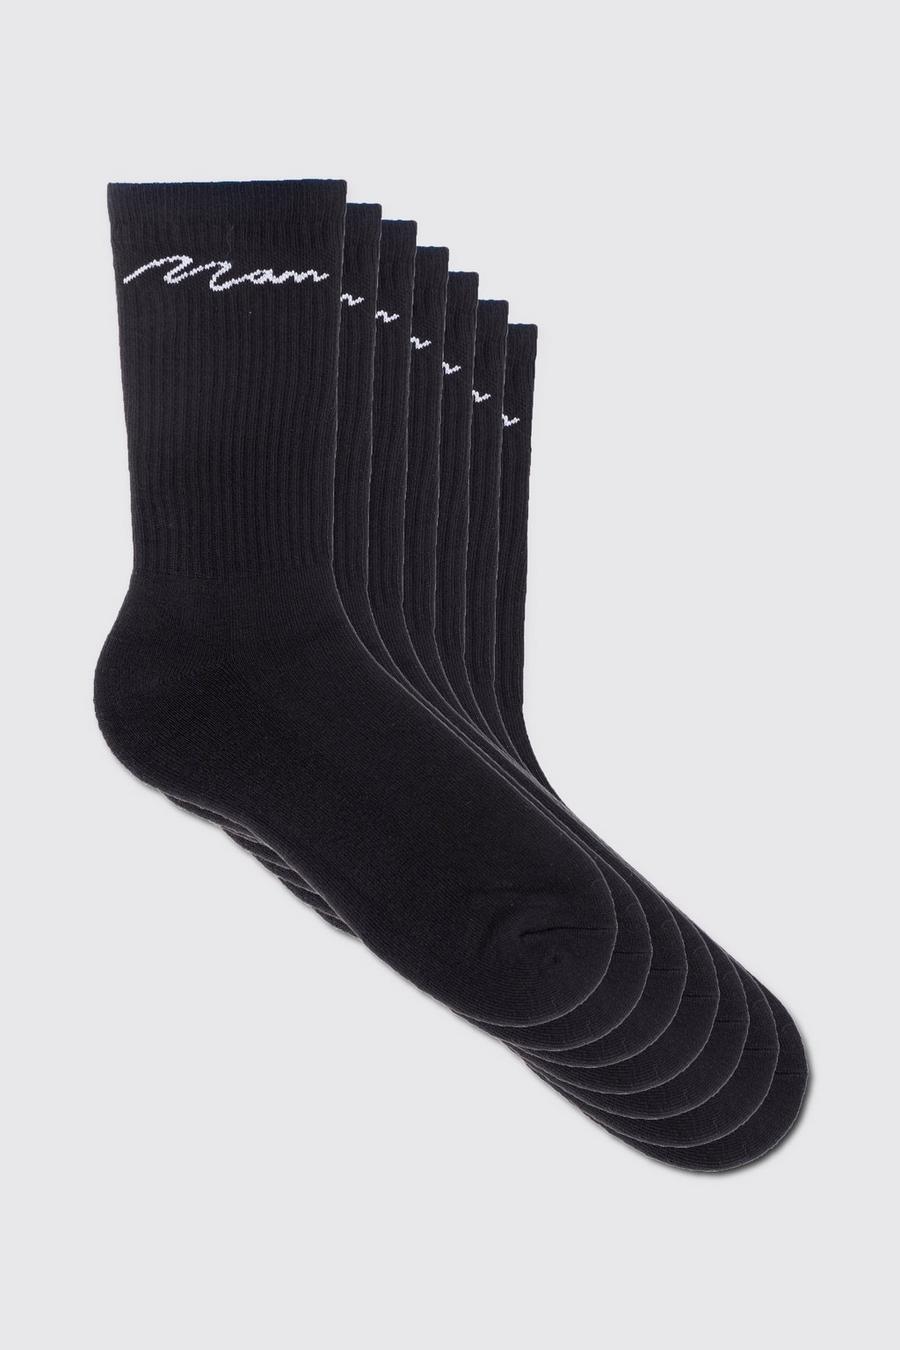 Pack de 7 pares de calcetines deportivos con firma MAN, Black image number 1